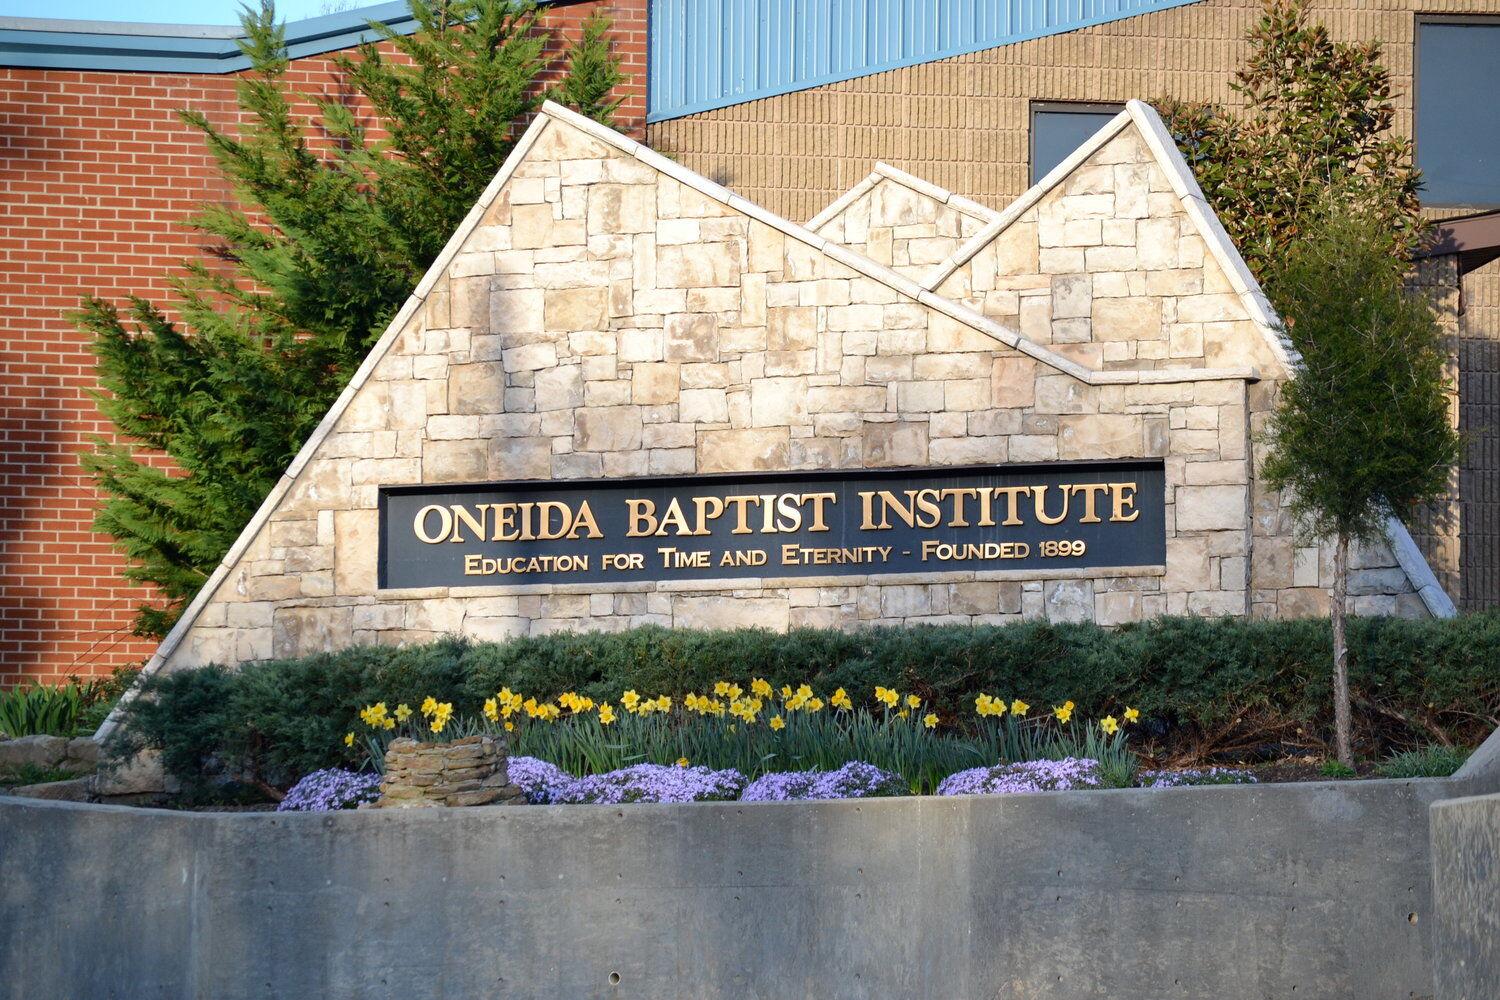 ONEIDA BAPTIST INSTITUTE Leaning on giants of faith Chester and Mai